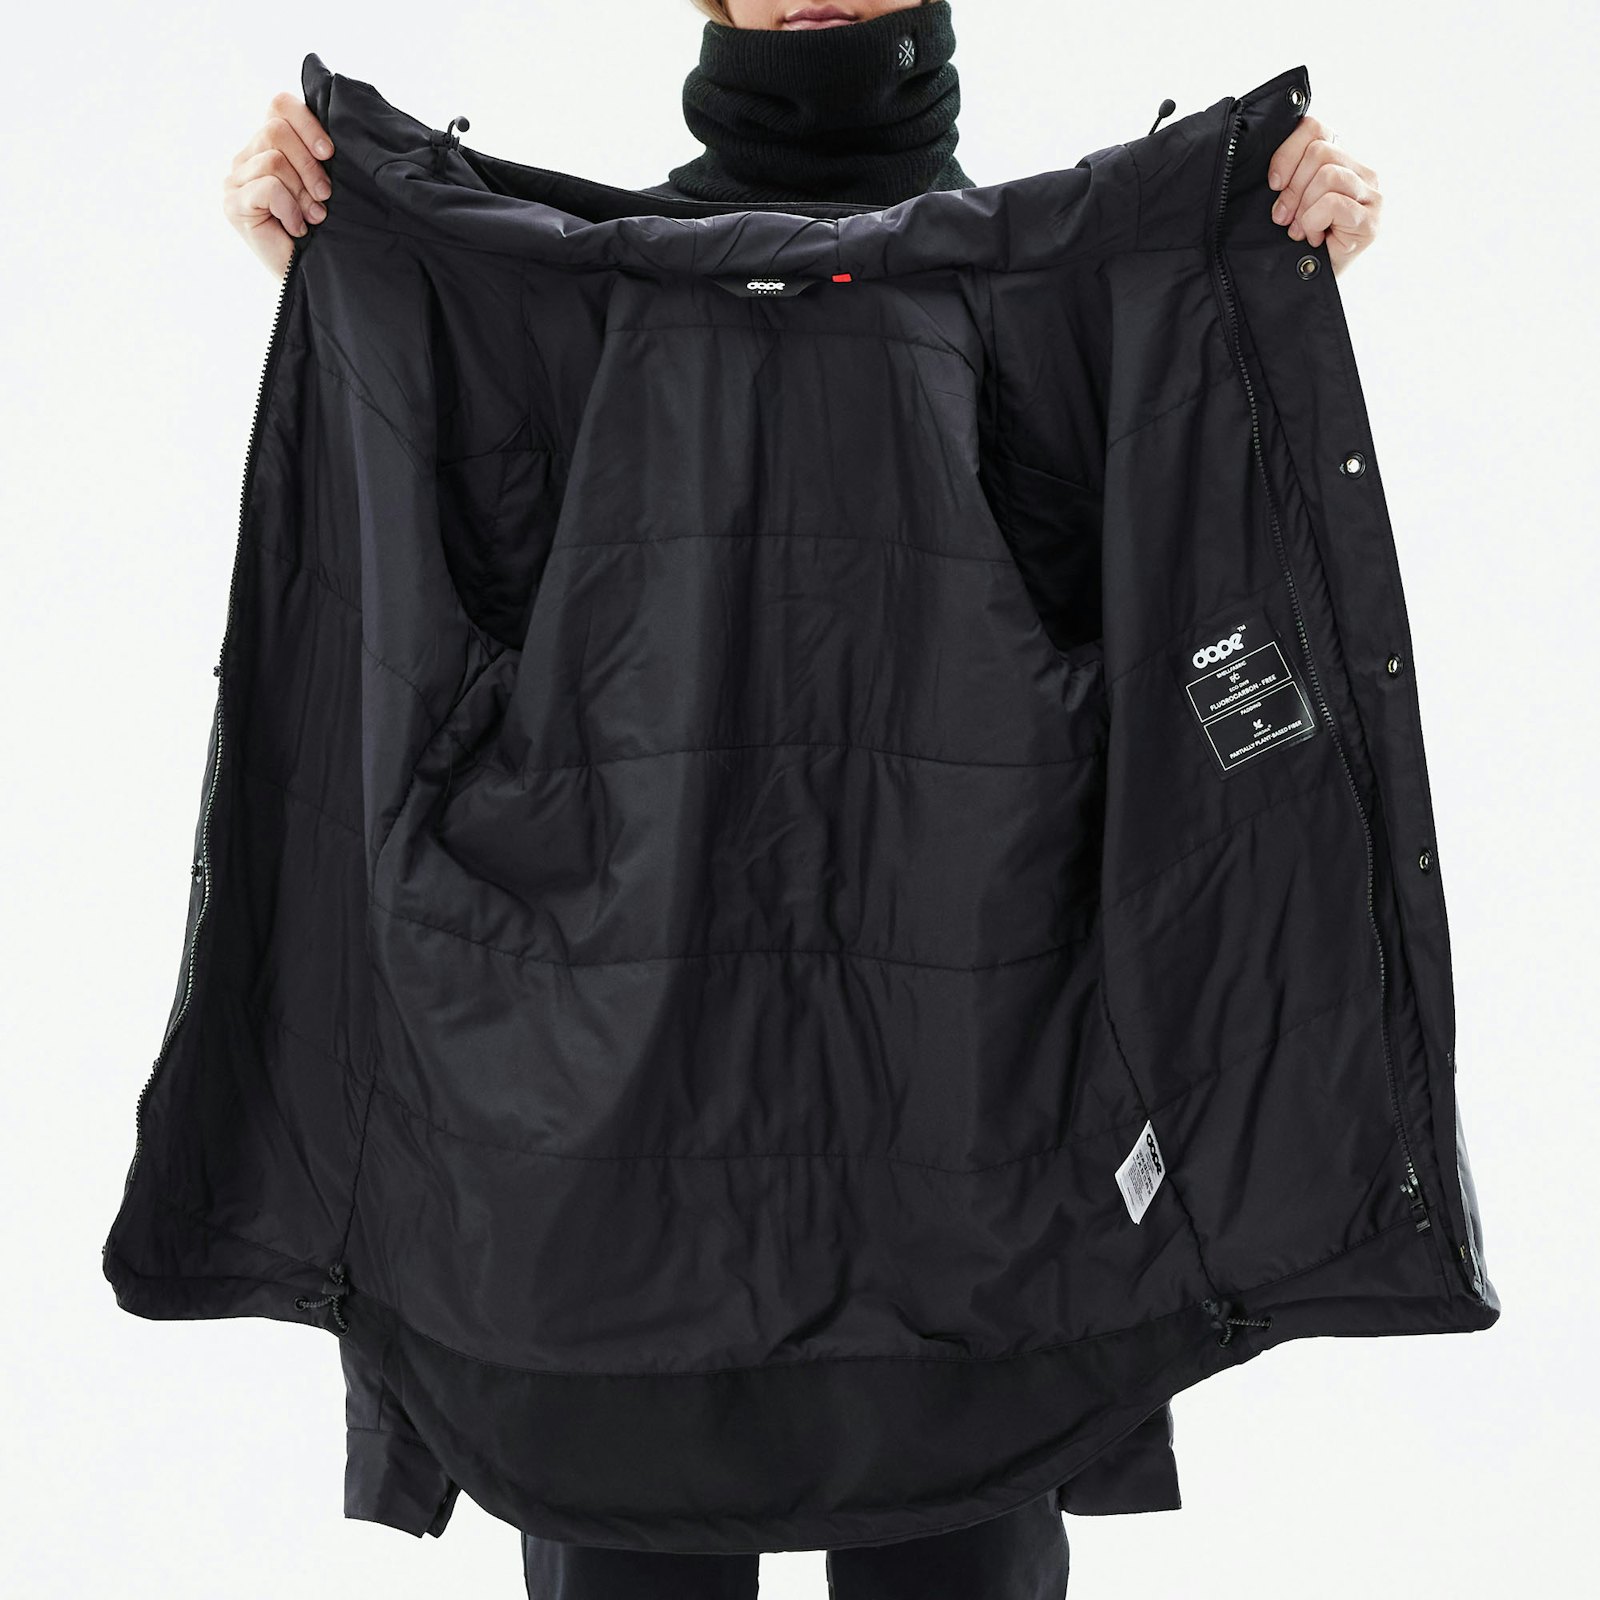 Dope Insulated W Midlayer Jacket Outdoor Women Black